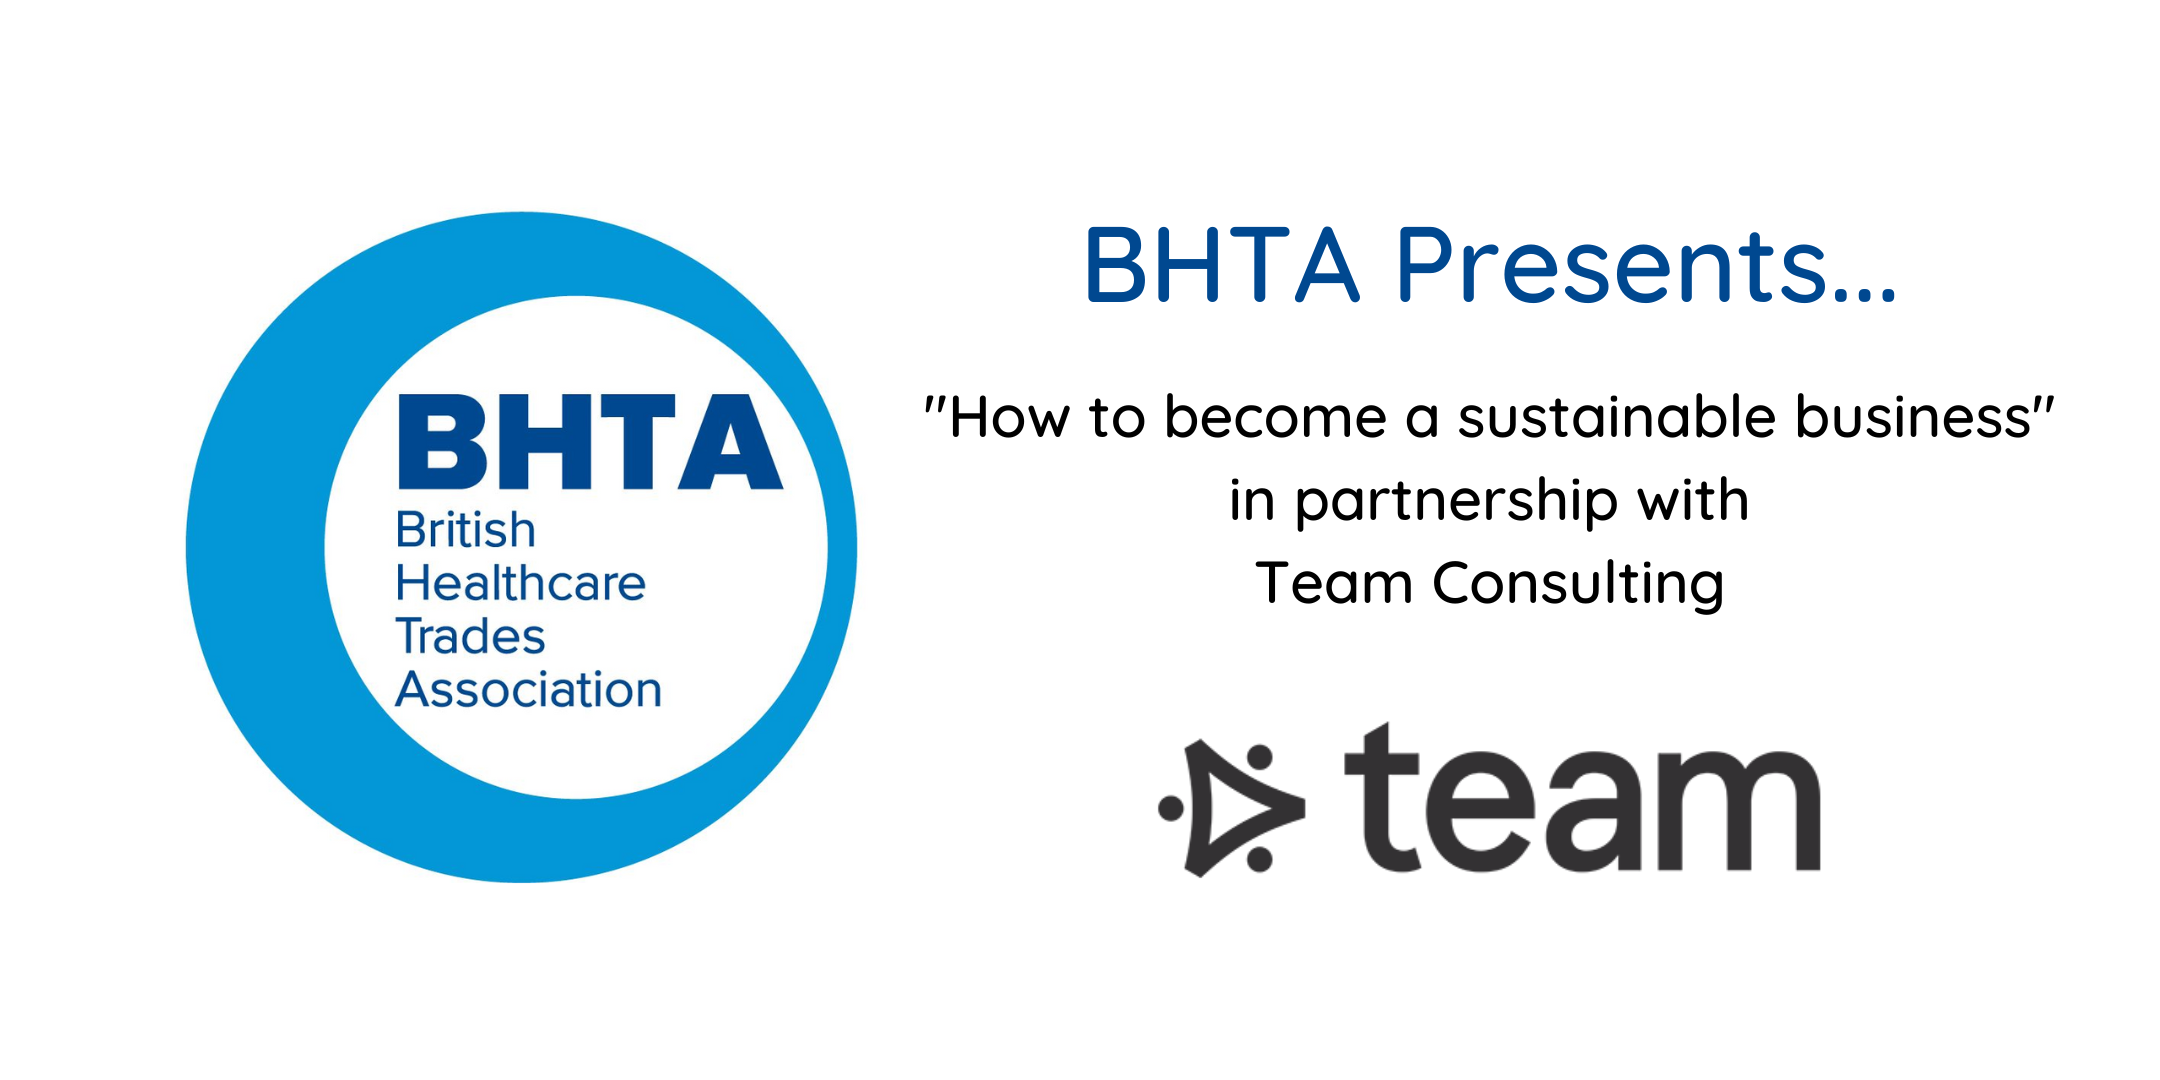 BHTA礼物... “如何成为可持续发展的企业”